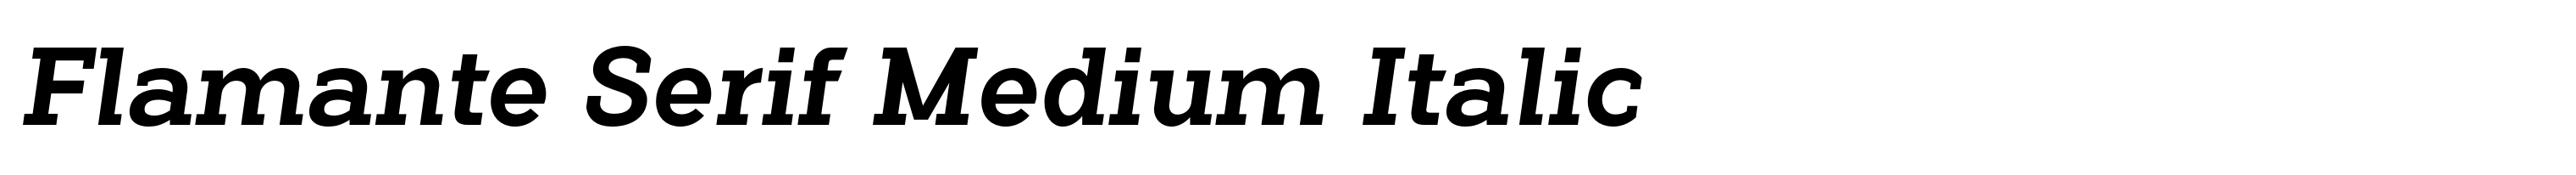 Flamante Serif Medium Italic